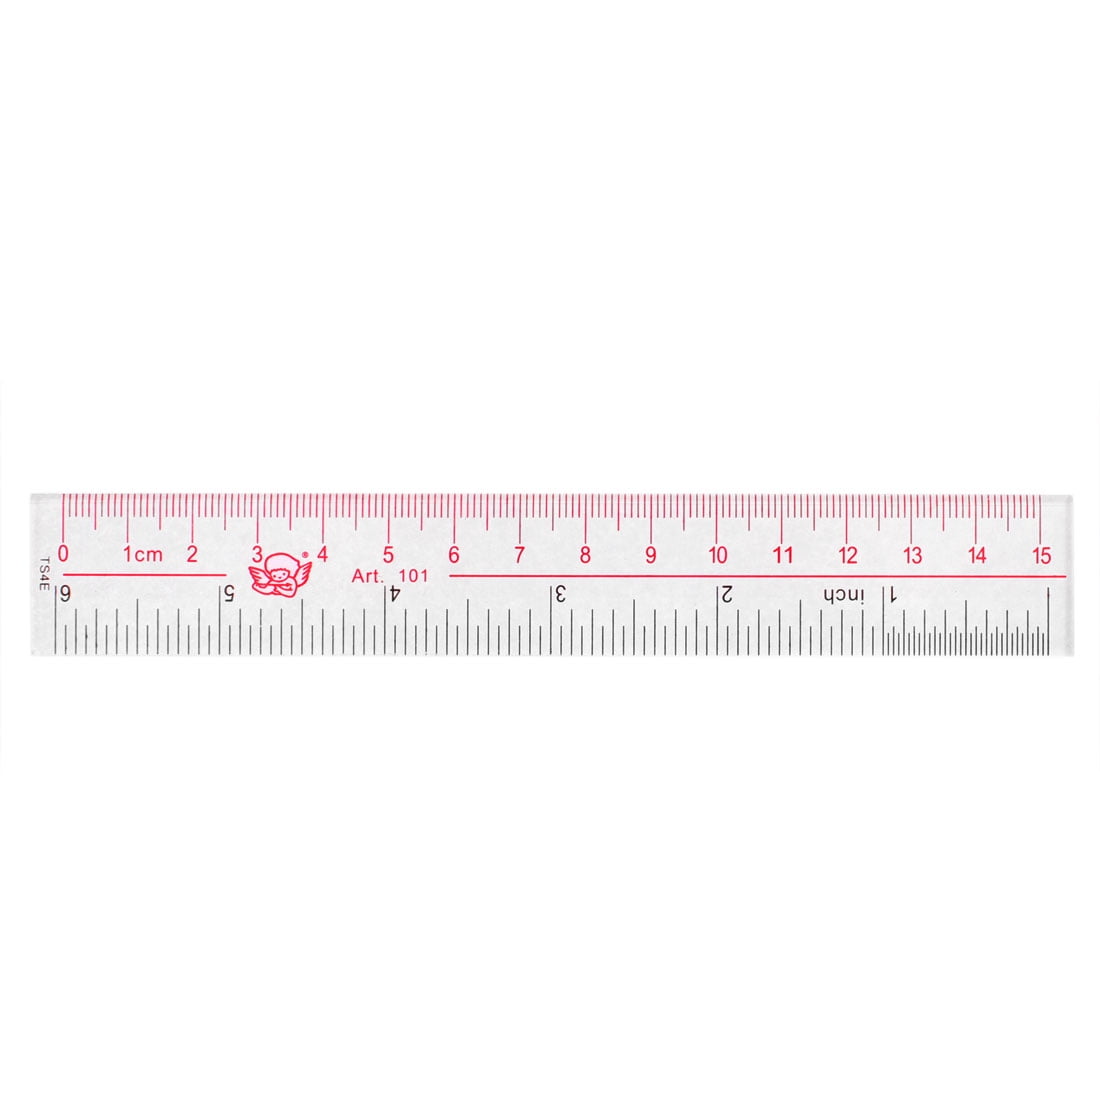 6" Plastic Clear Rulers For School College Home Students 5 x 15cm NATARAJ 